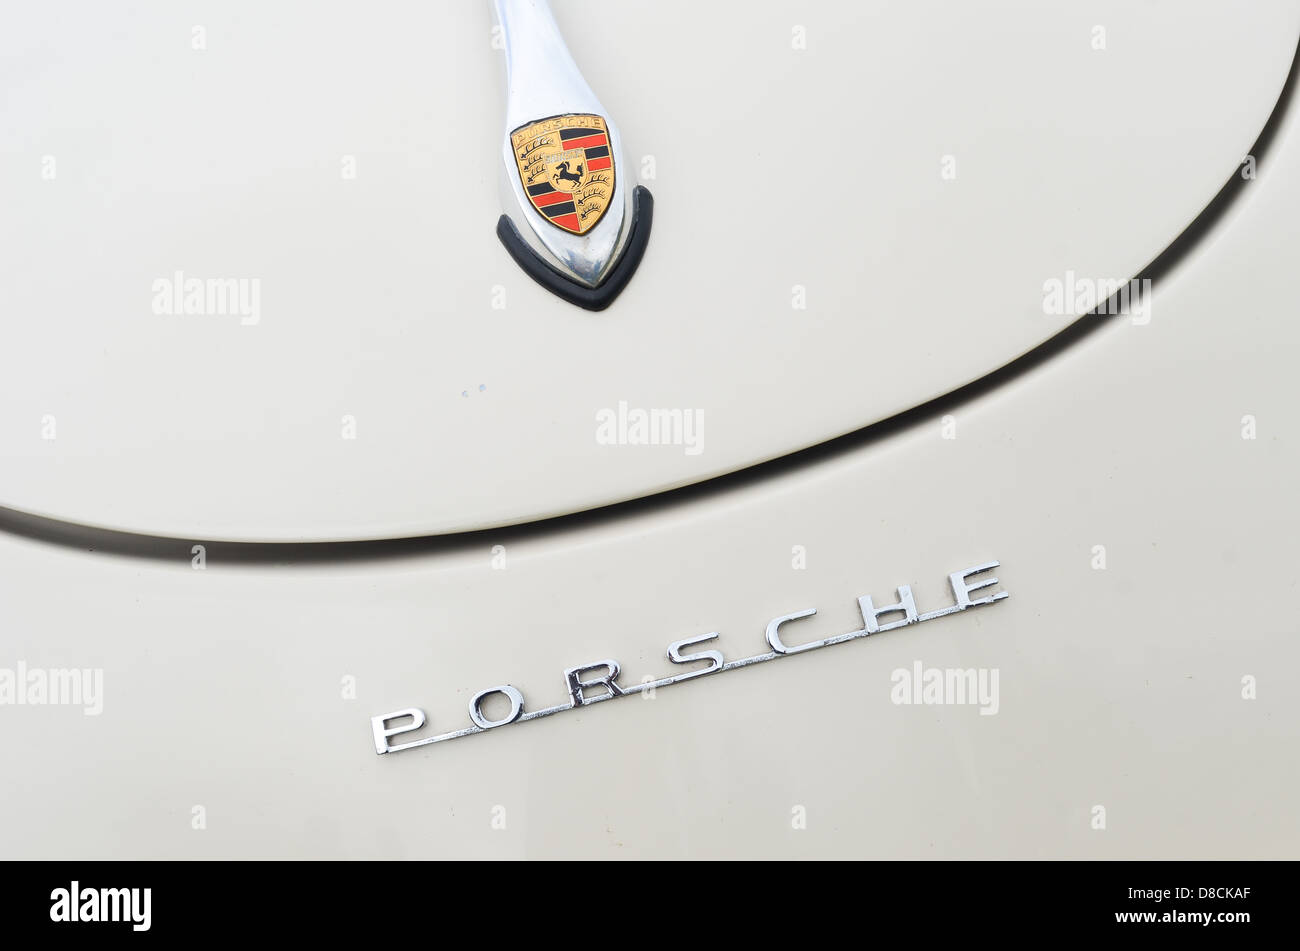 Close-up of a classic car – Porsche Speedster. Stock Photo